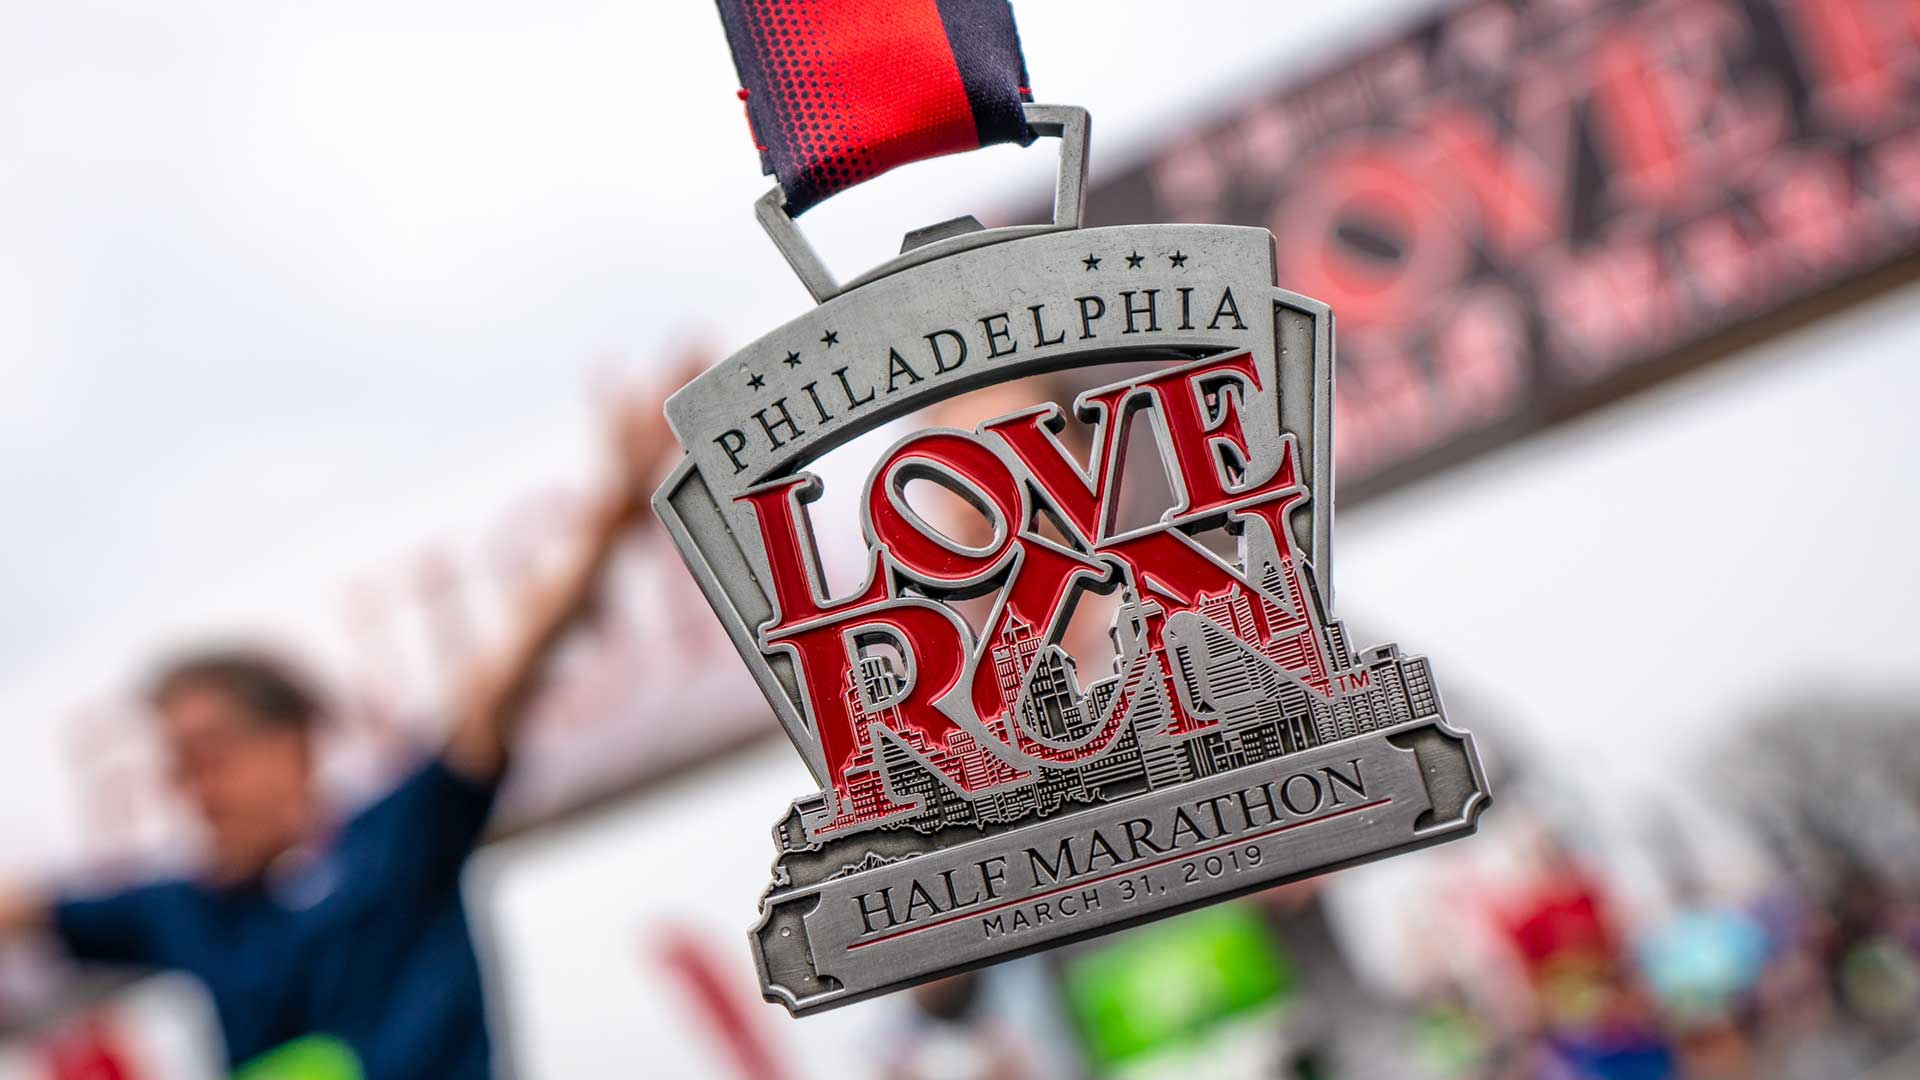 Philadelphia Love Run Medal by Always Advancing